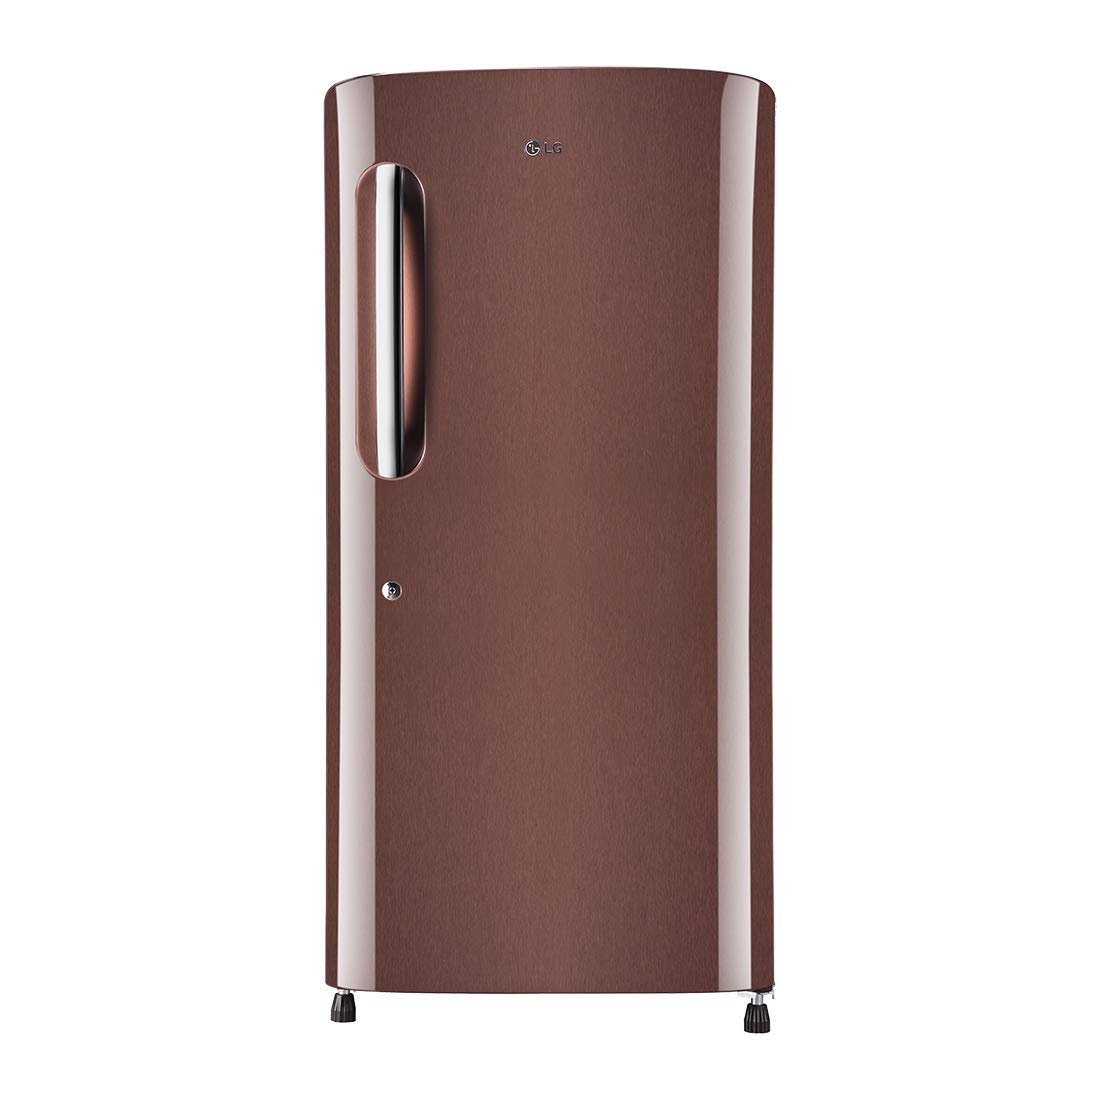 LG 215 L 4 Star Inverter Direct Cool Single Door Refrigerator (GL-B221AASY, Amber Steel)